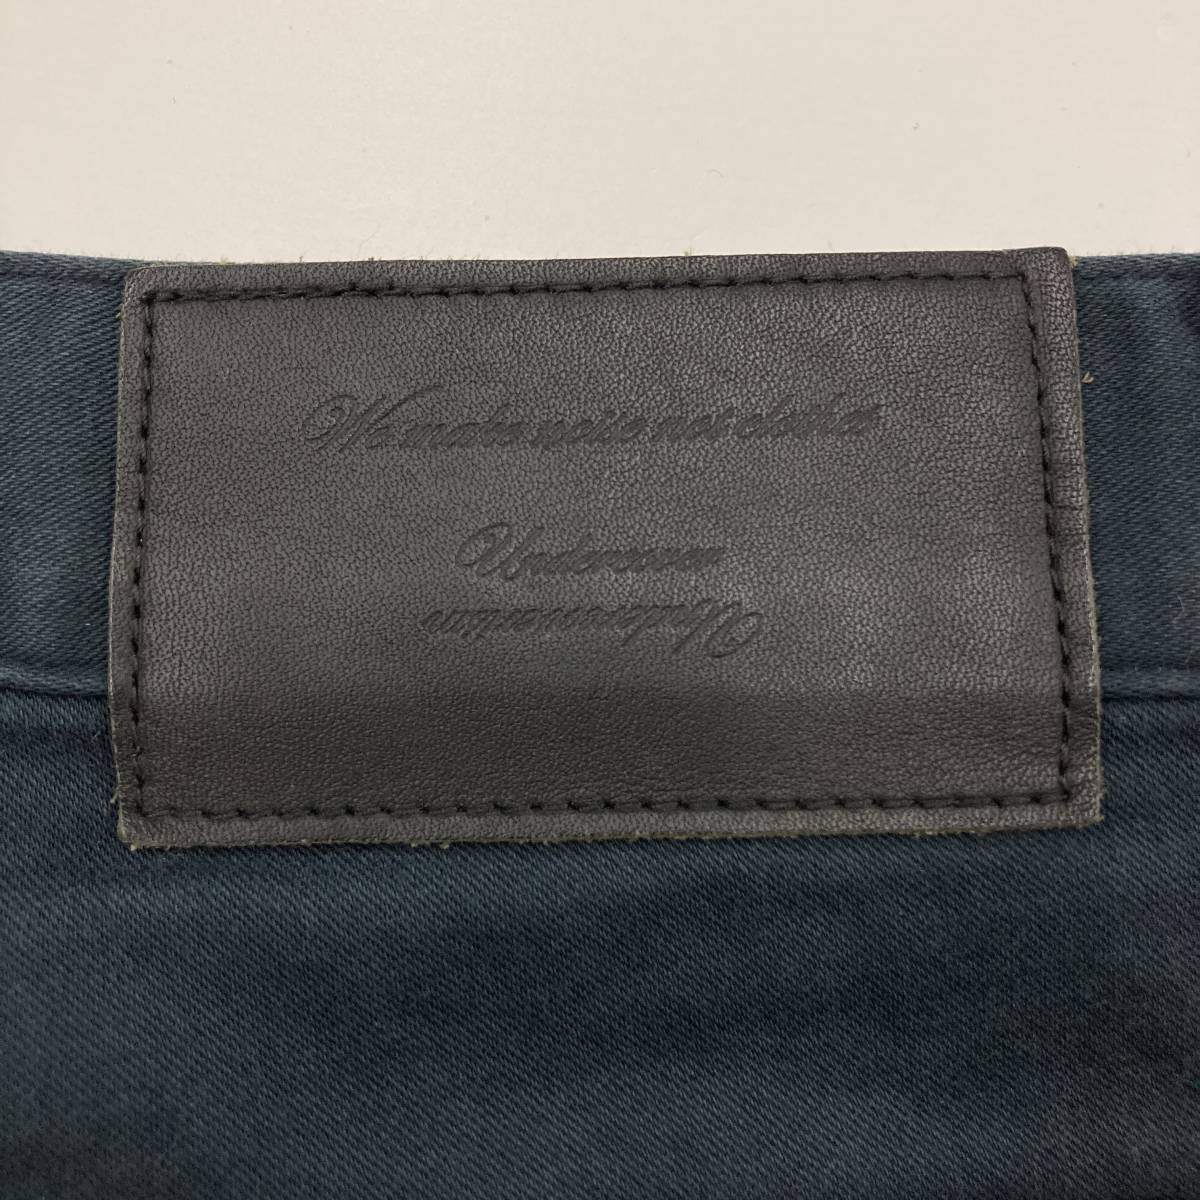  редкость UNDERCOVER брюки-карго обтягивающий стрейч темно-синий темно-синий 1 размер undercover молния вышивка милитари архив archive 0242